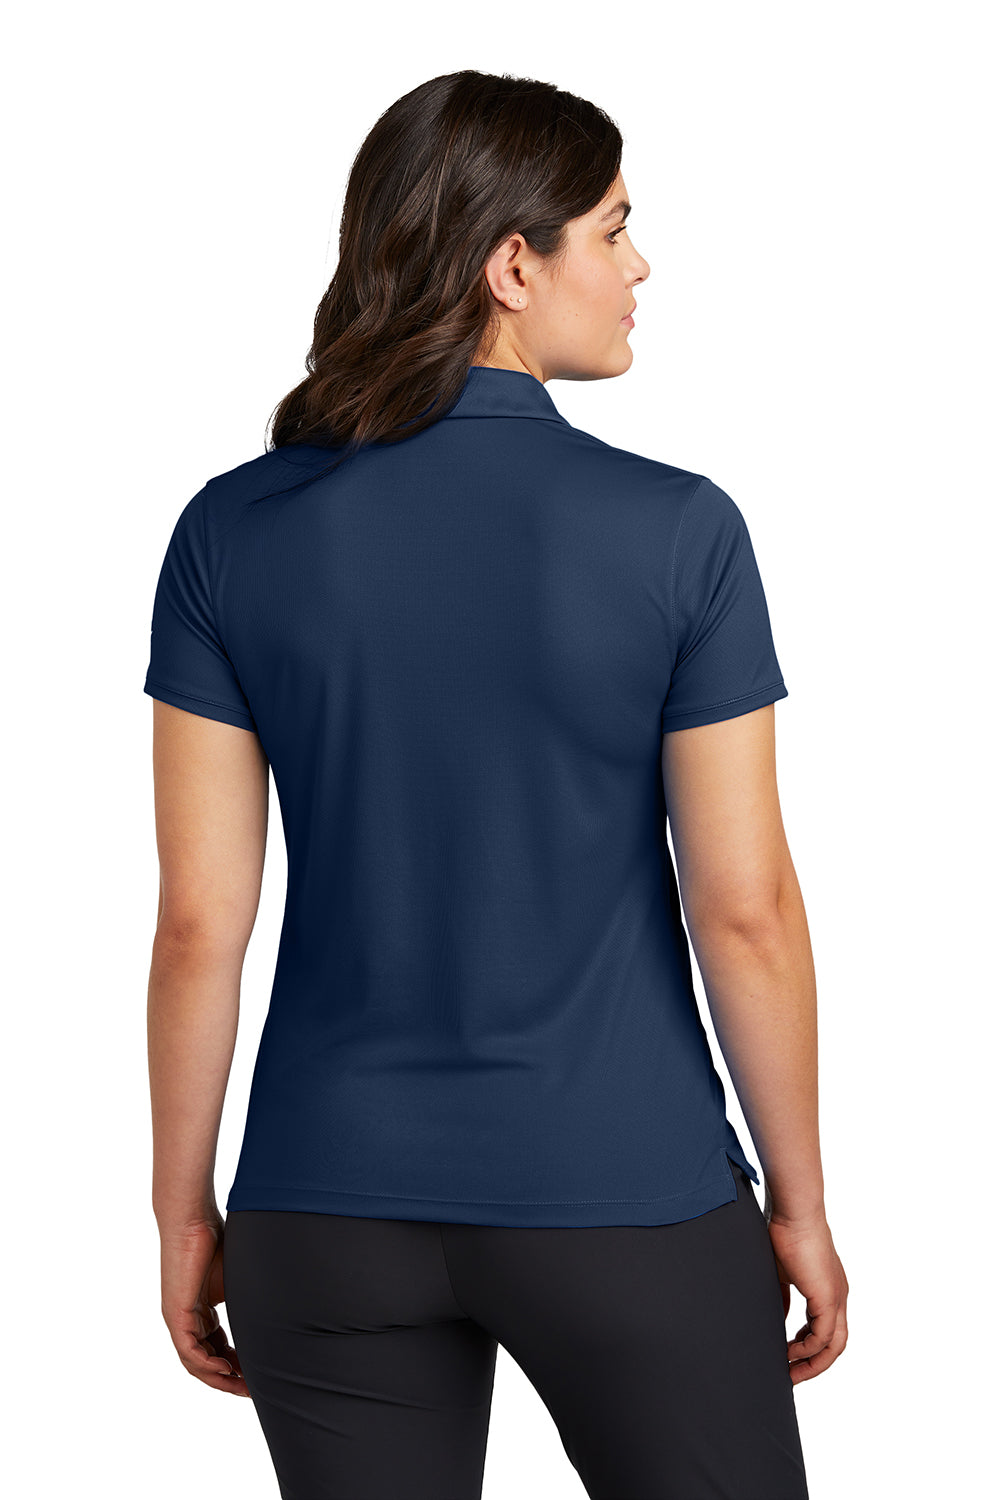 Nike NKDX6685 Womens Victory Dri-Fit Moisture Wicking Short Sleeve Polo Shirt College Navy Blue Model Back